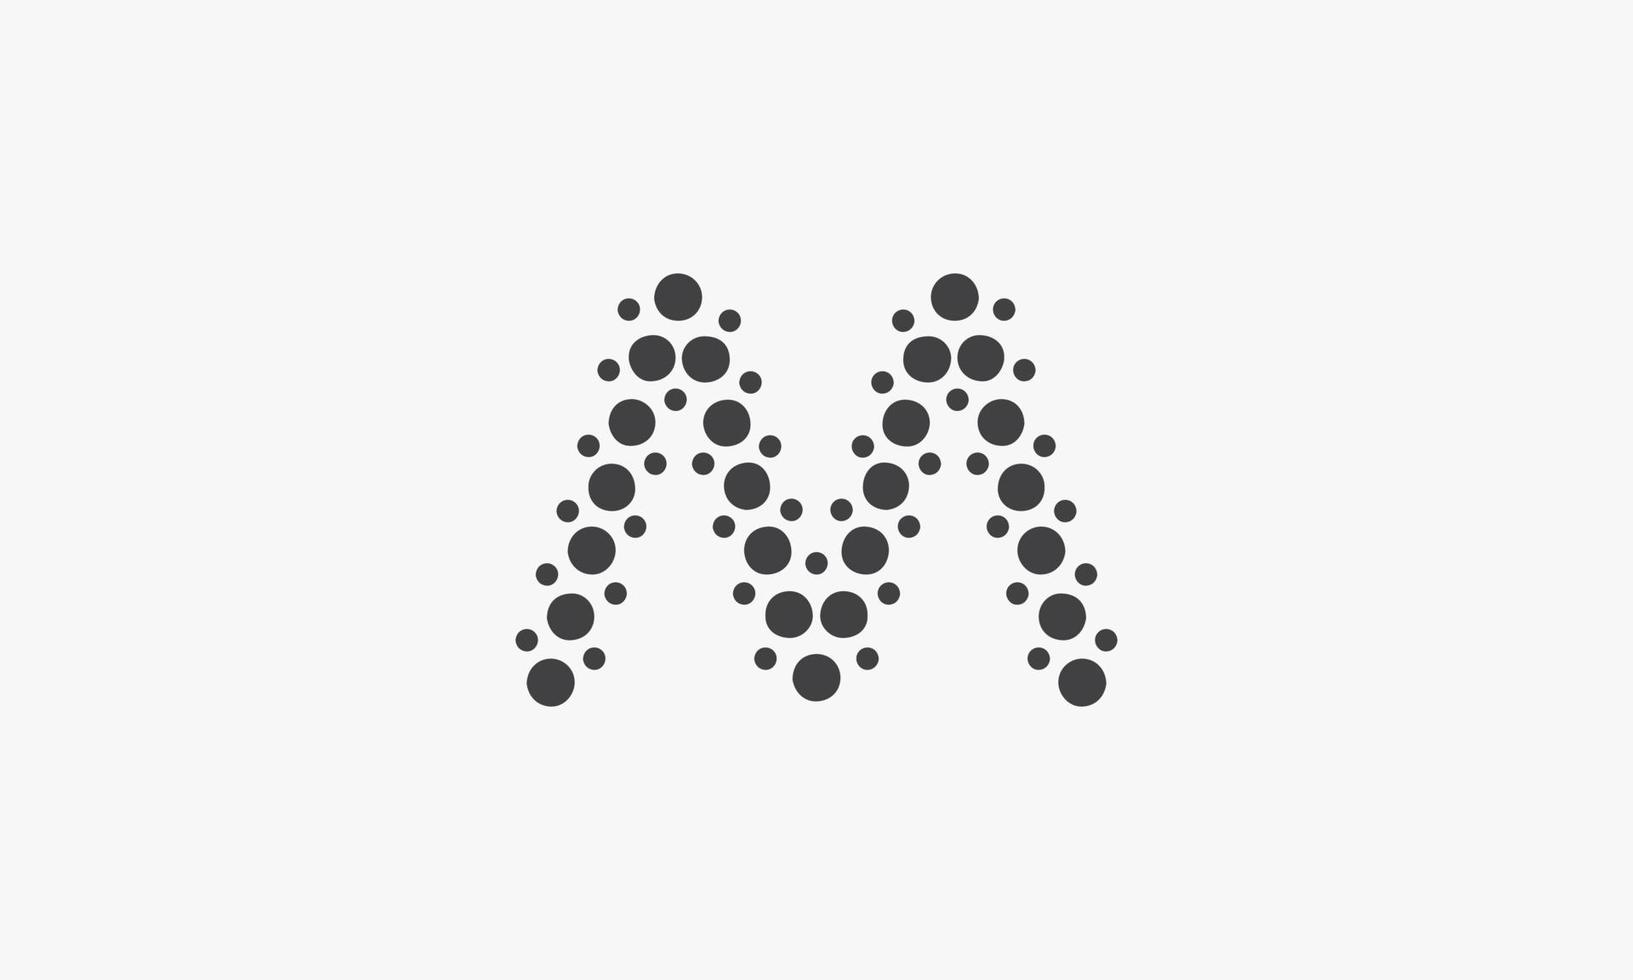 letra m logotipo pontilhado conceito isolado no fundo branco. vetor